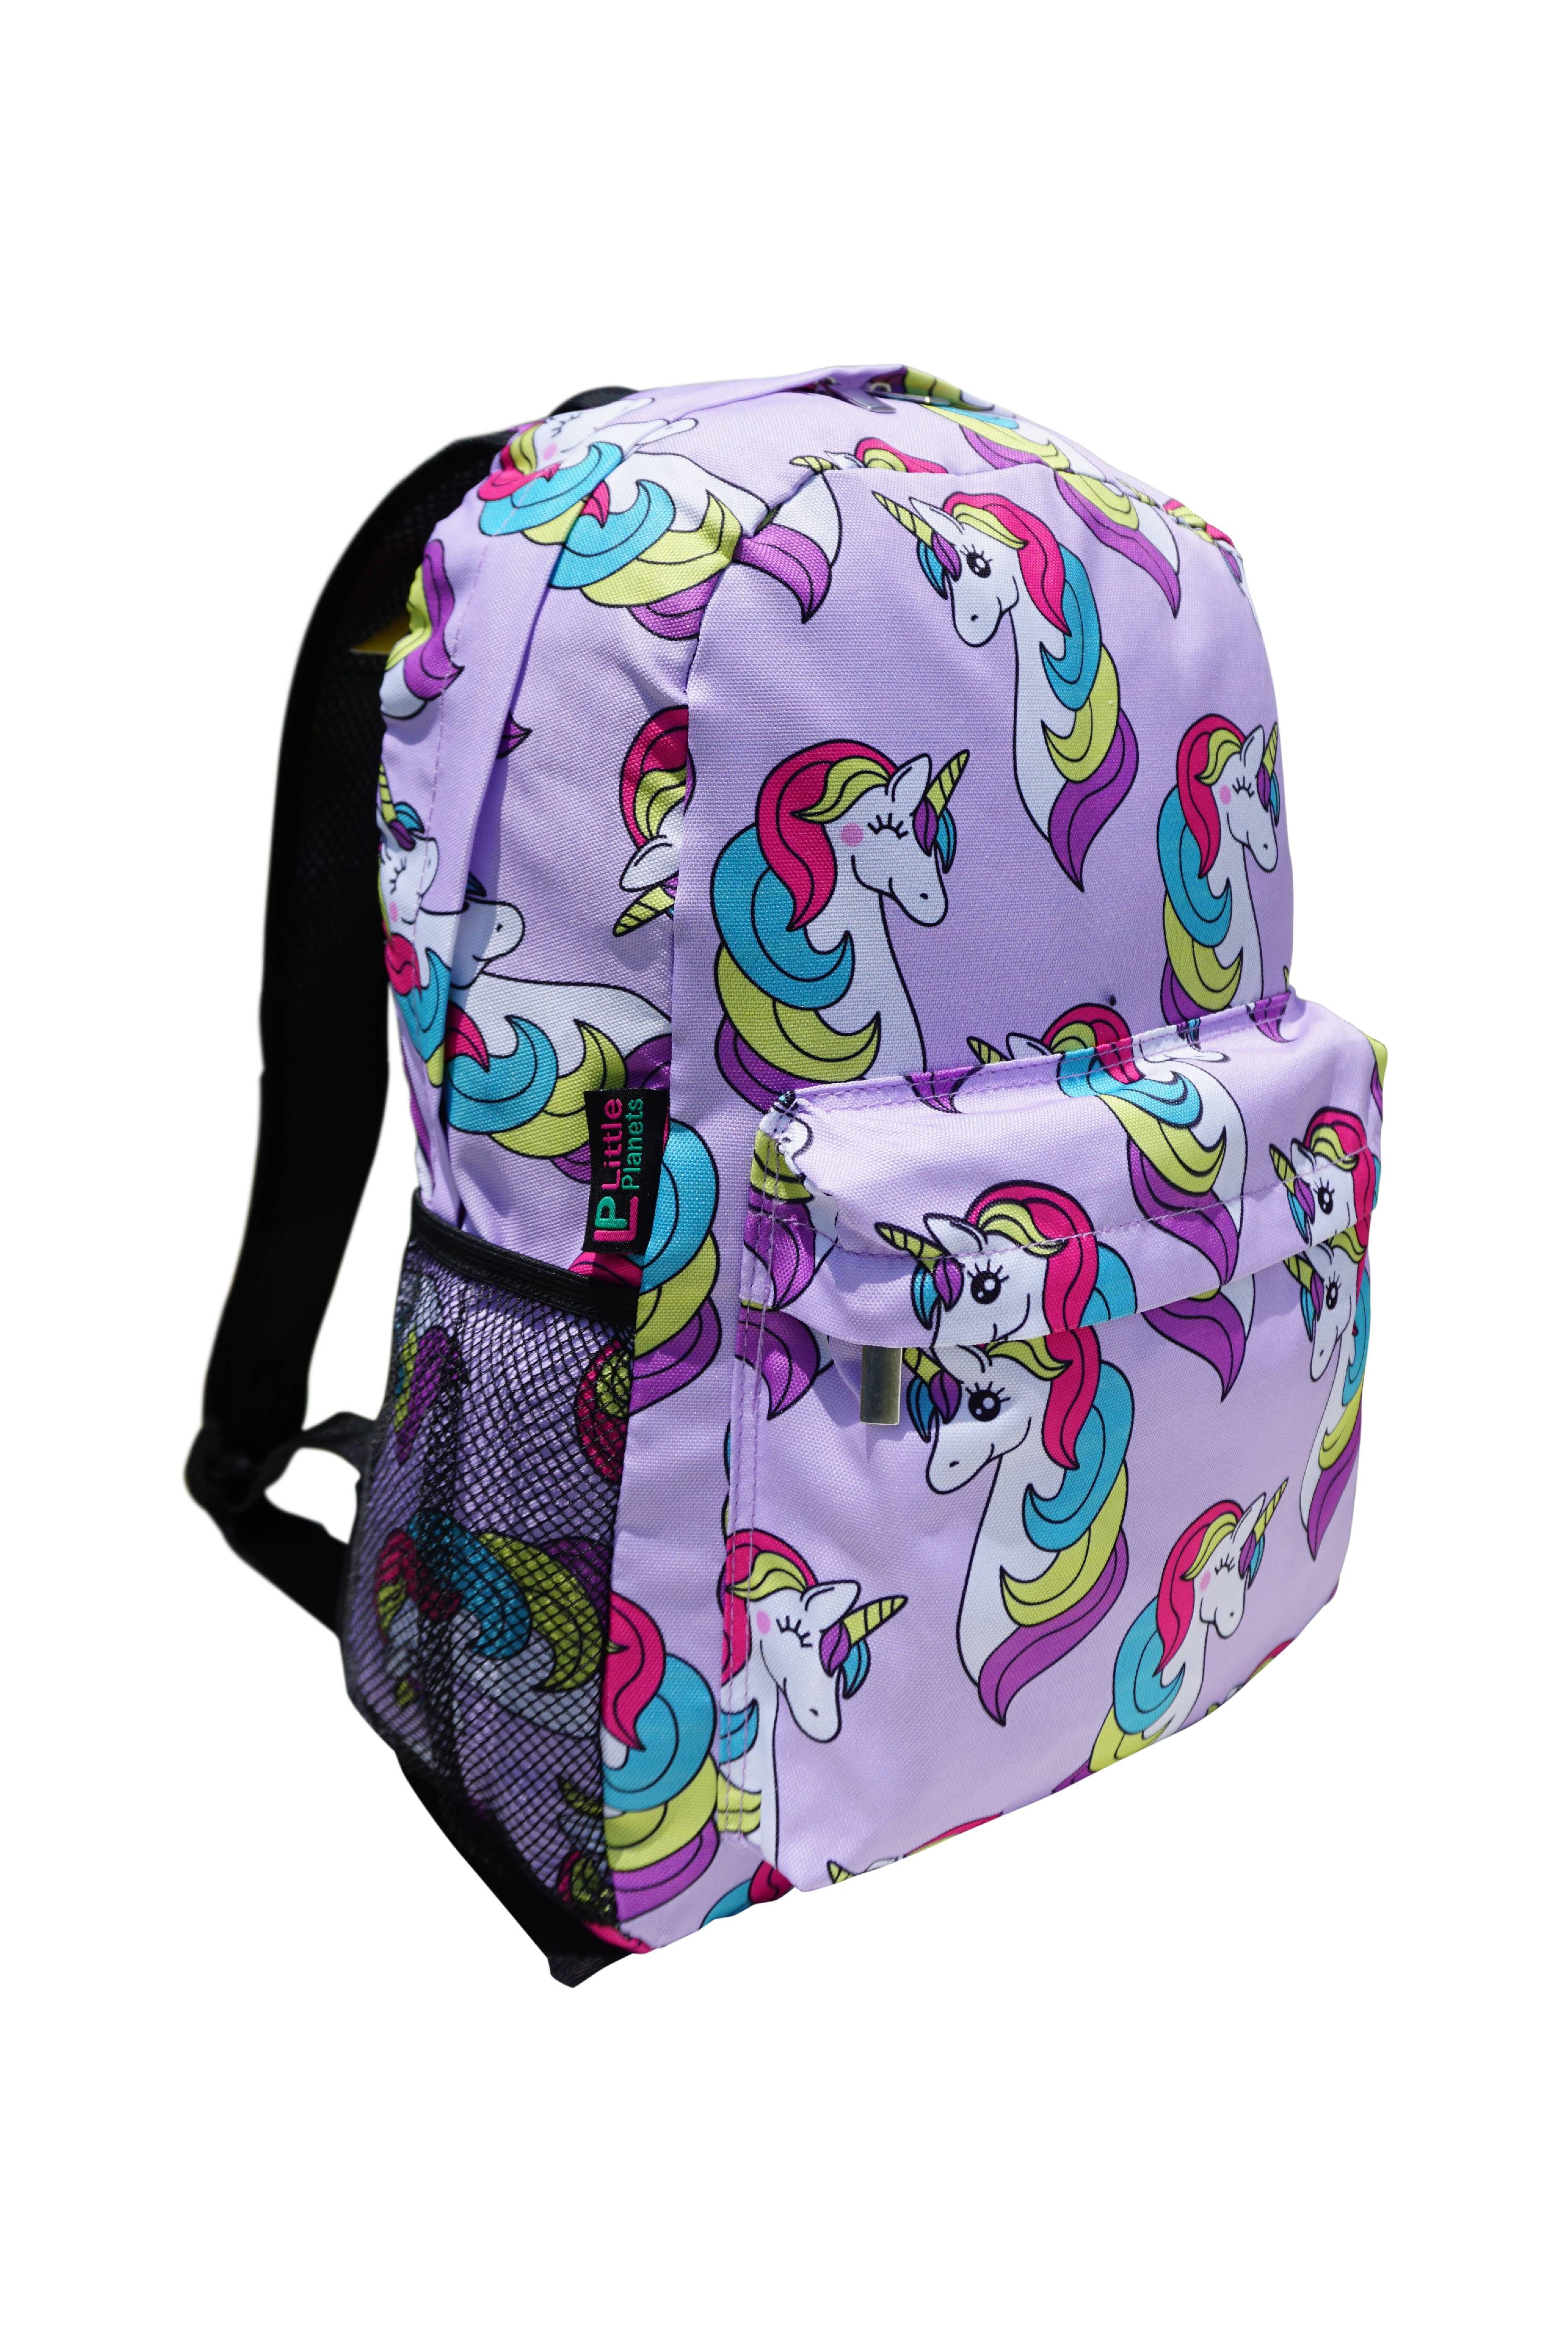 Little Planets Boys Girls All Over Print 16'' Kid School Backpack, Unicorn